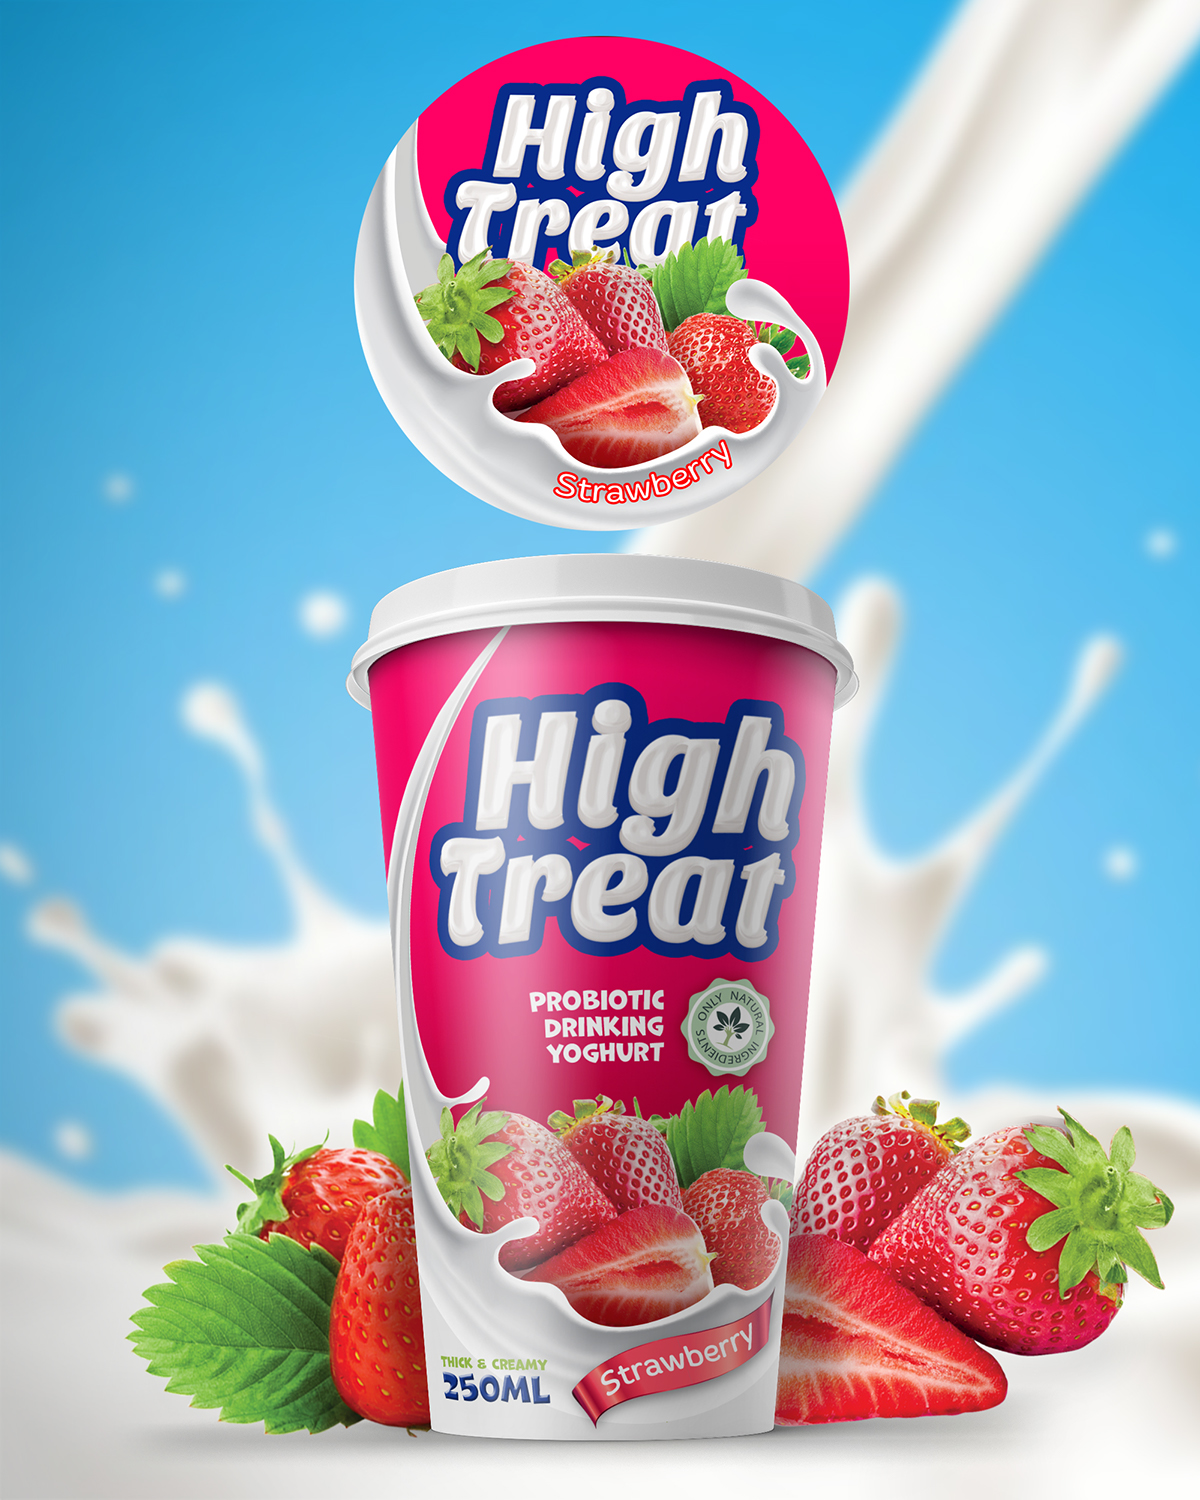 yogurt packaging design